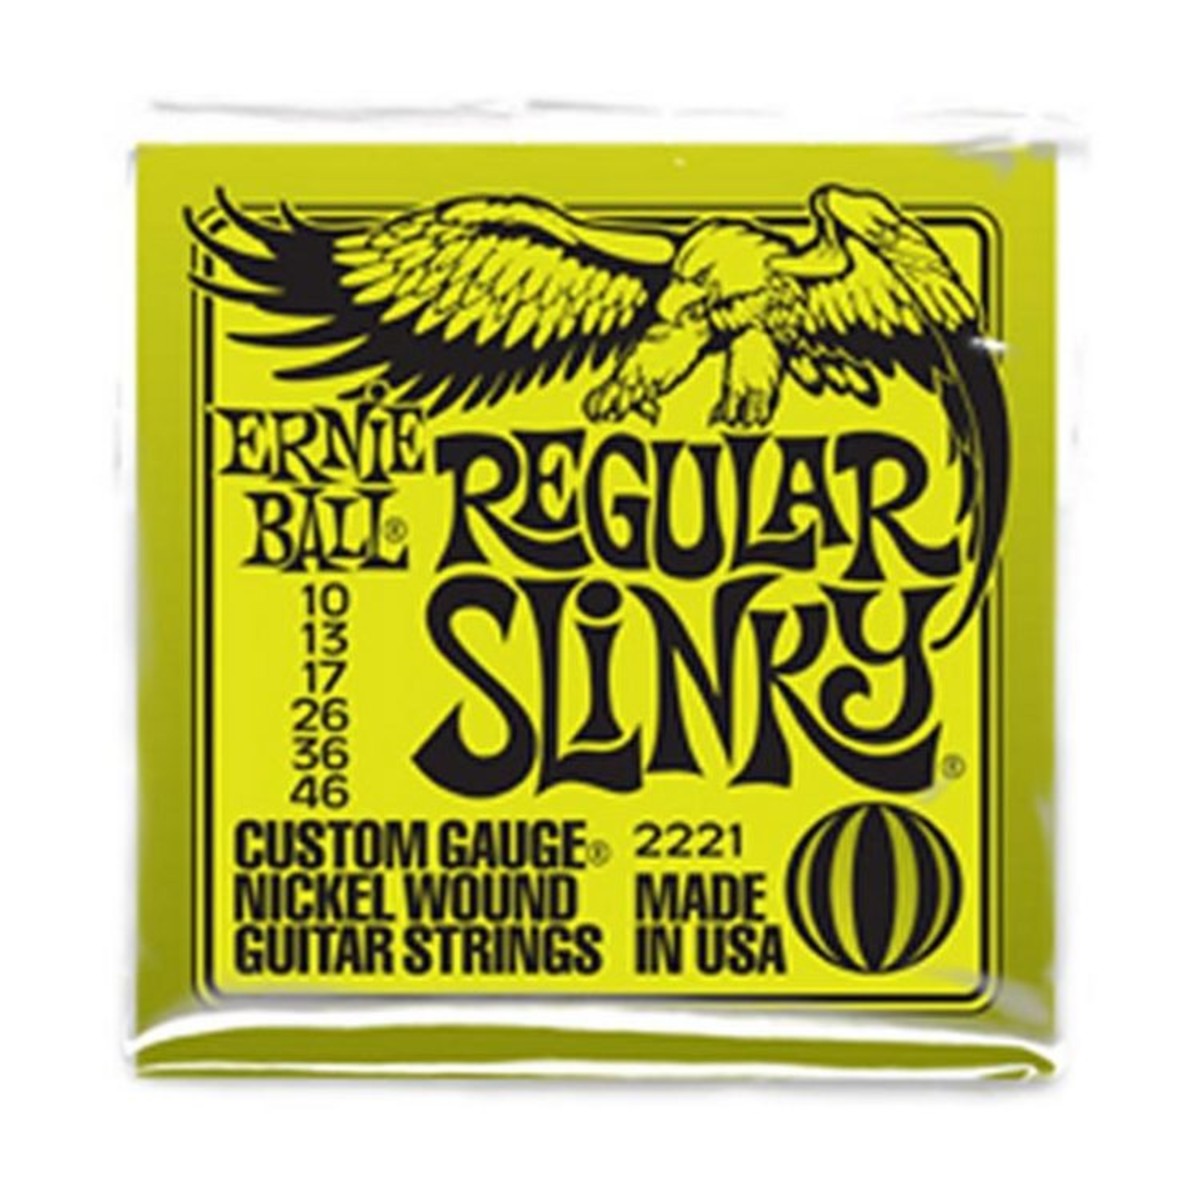 Ernie Ball regelmäßige Slinky Cobalt E-Gitarre Saiten 3 Pack 10-46 Gauge